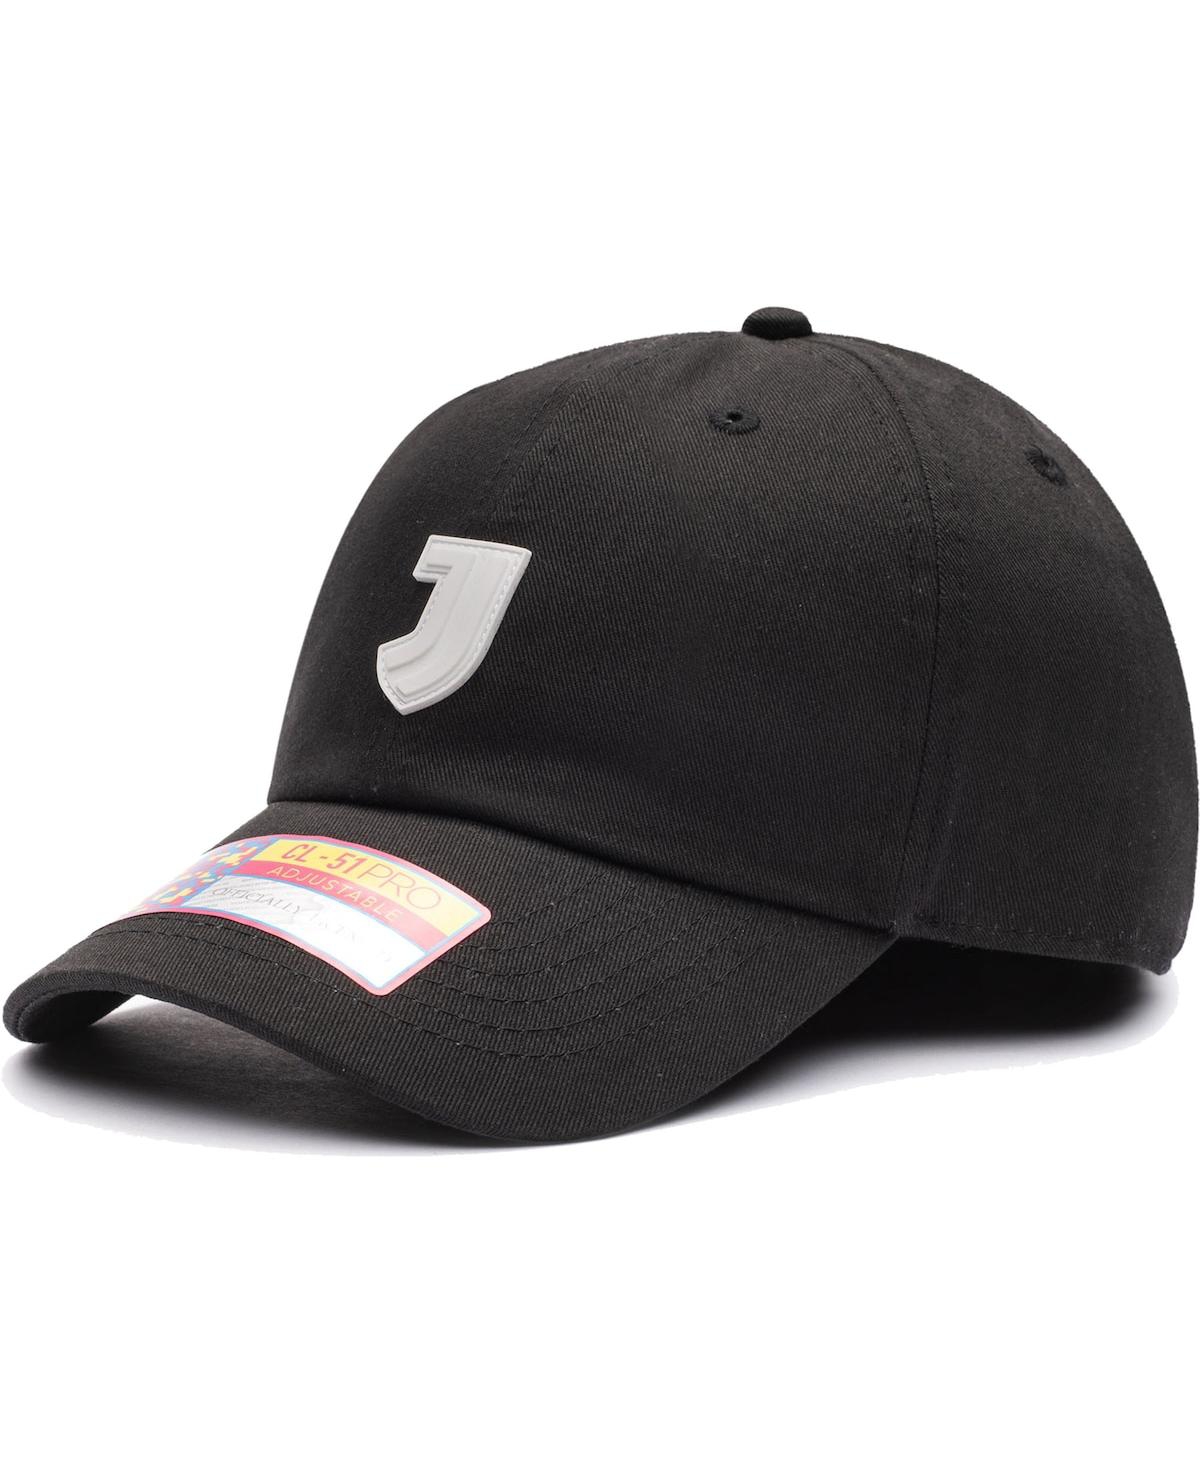 Fan Ink Men's Black Juventus Casuals Classic Adjustable Hat